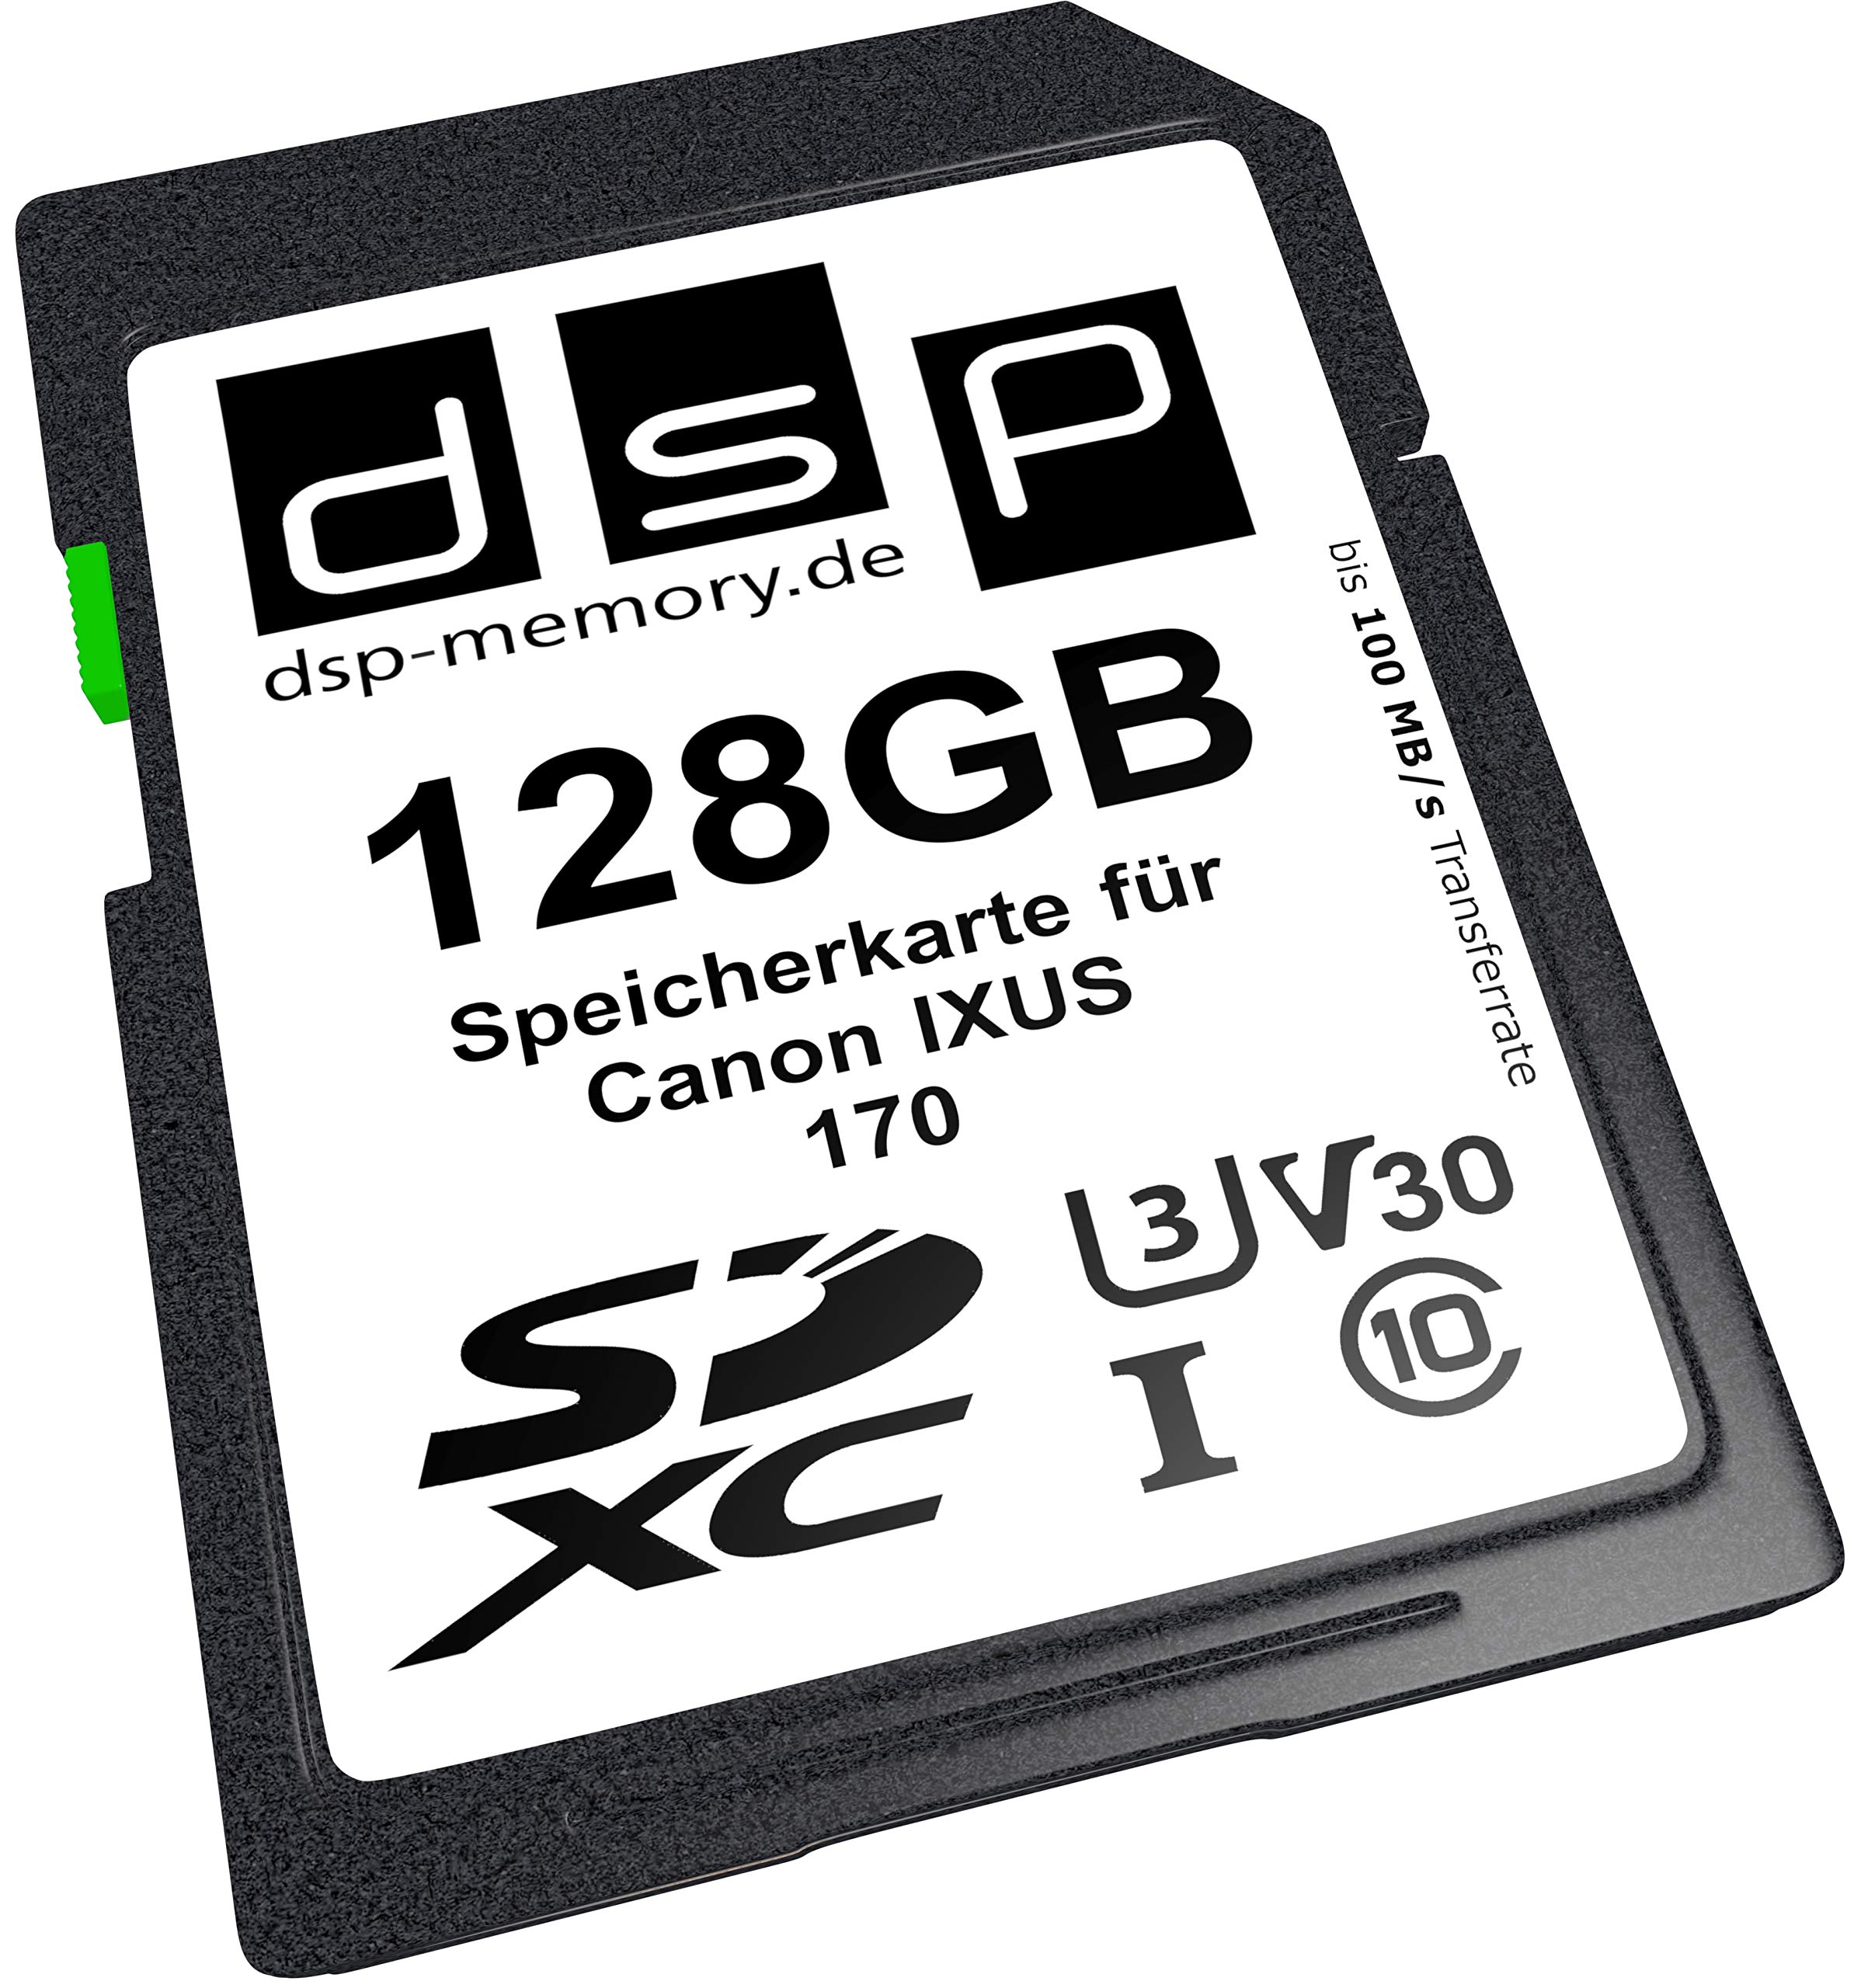 DSP Memory 128GB Professional V30 Speicherkarte für Canon IXUS 170 Digitalkamera